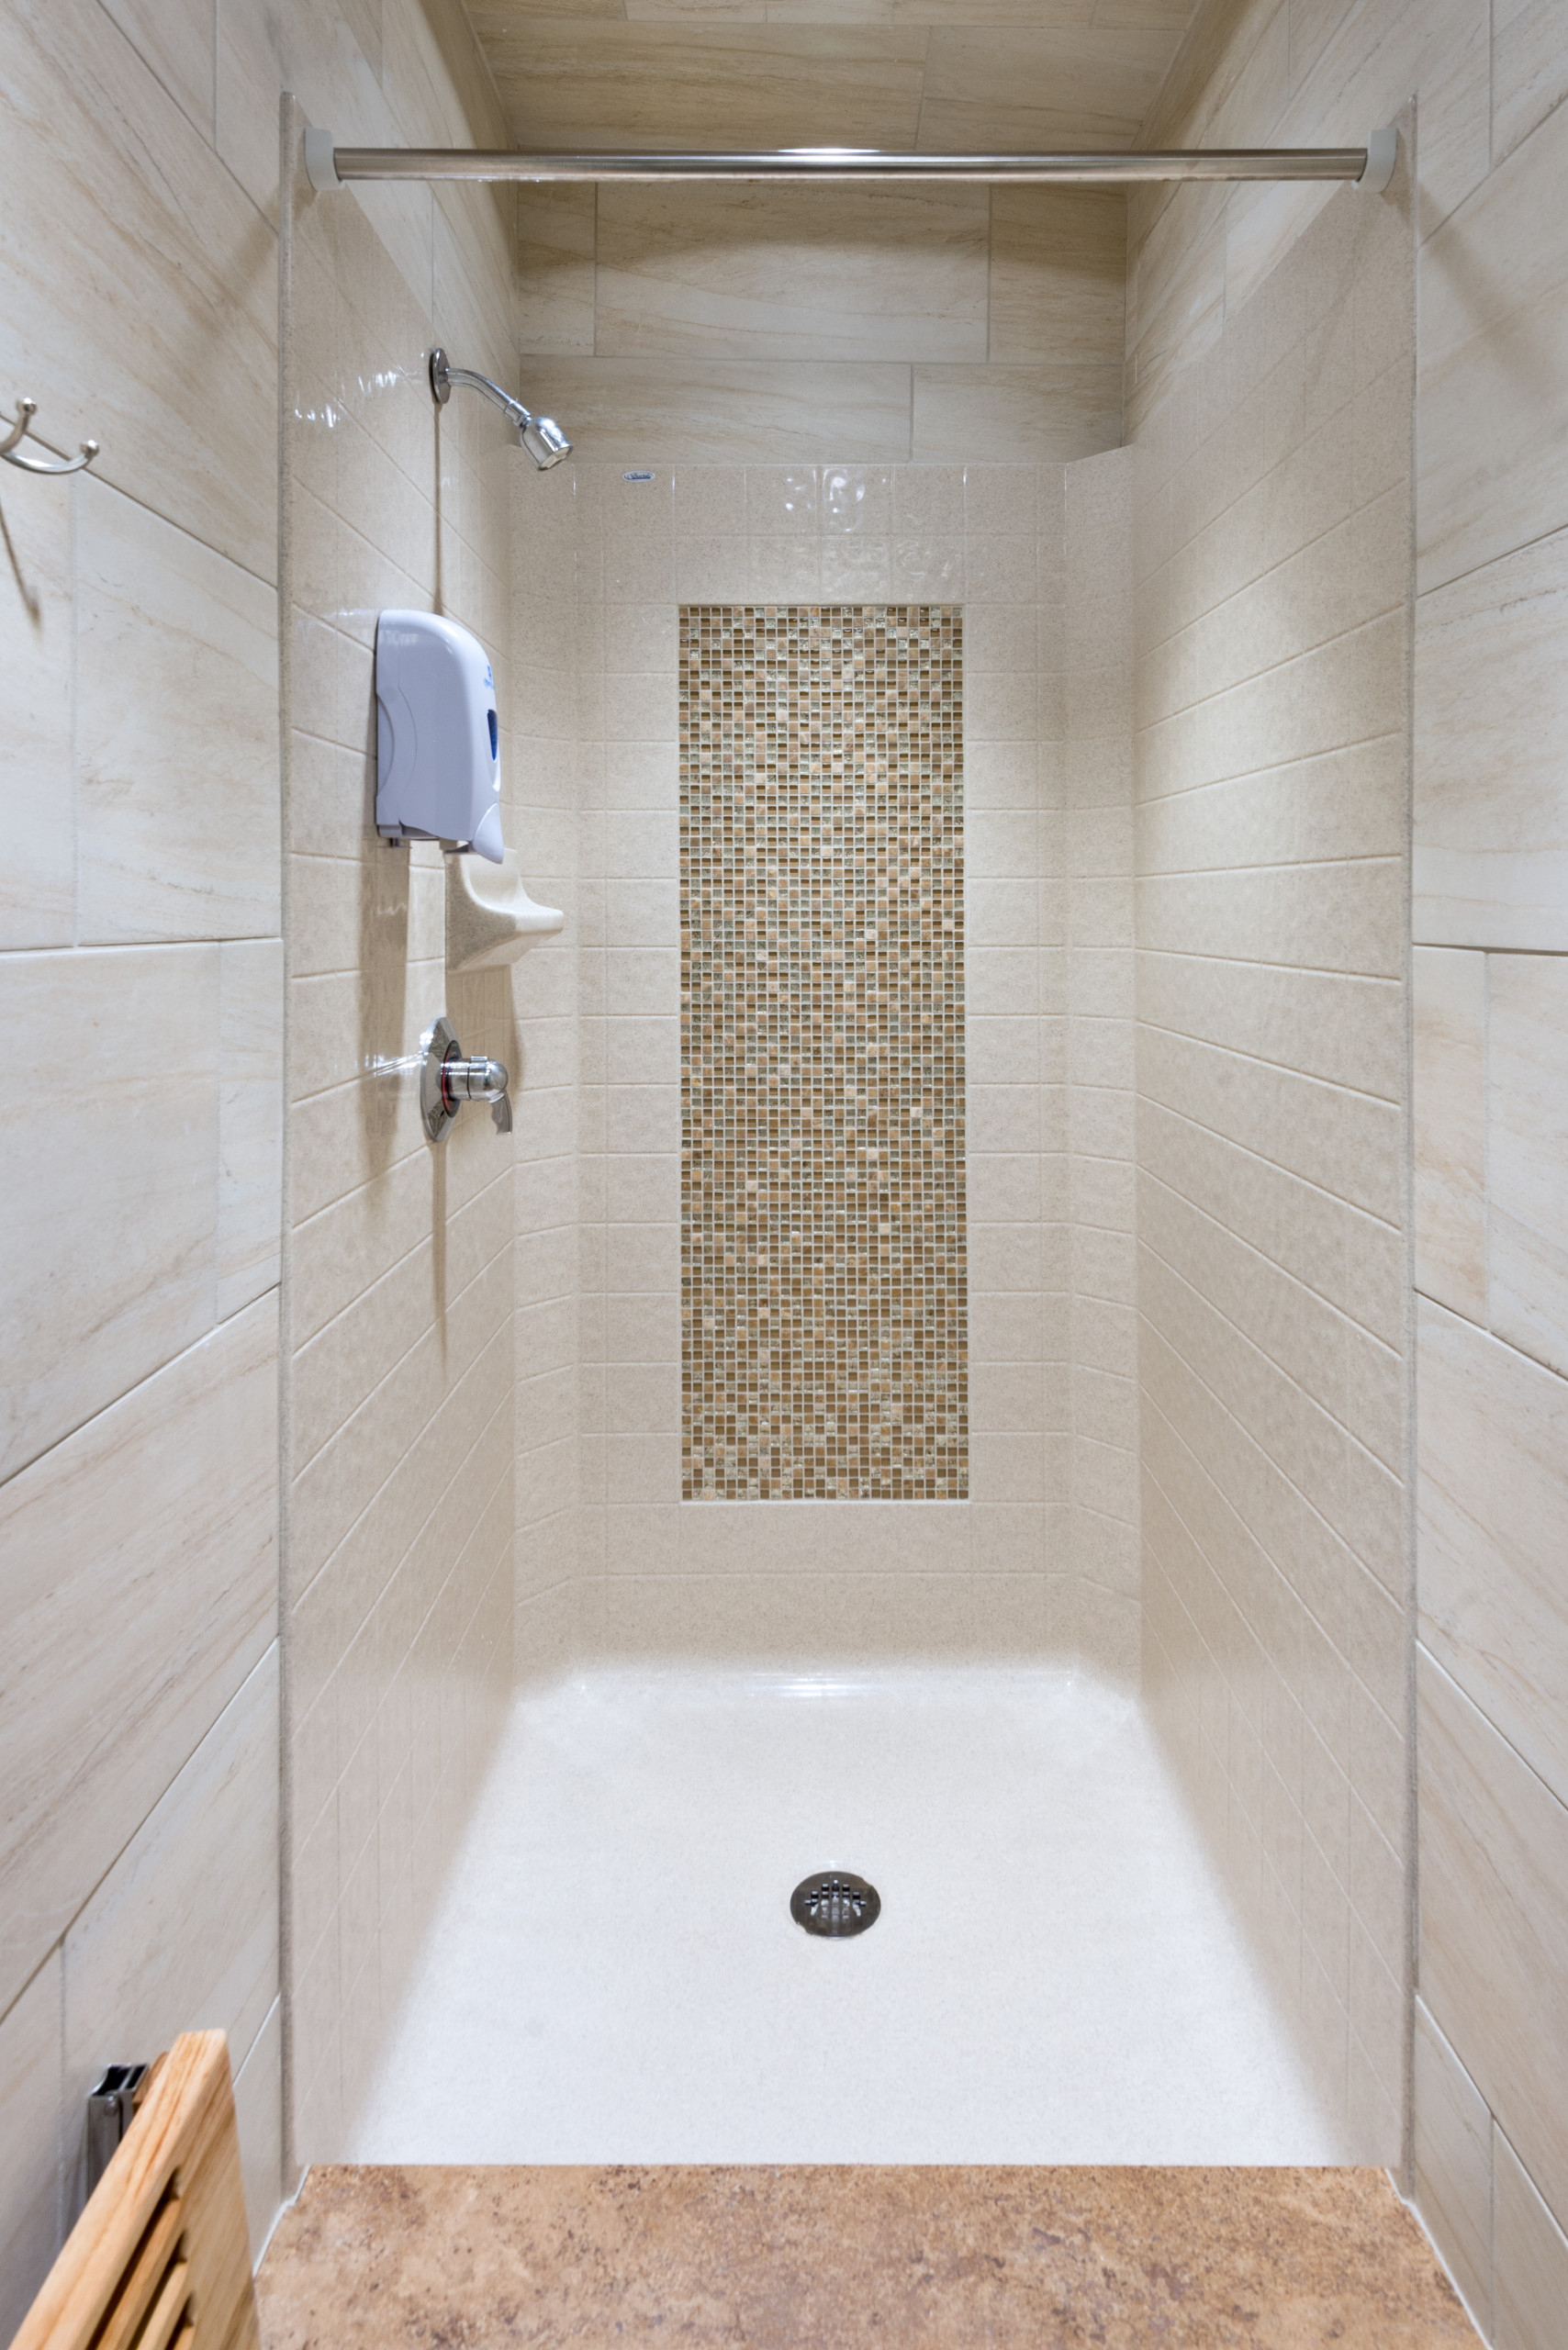 Corner Soap Dish Bathroom Ideas Houzz, Installing A Soap Dish In Tile Shower